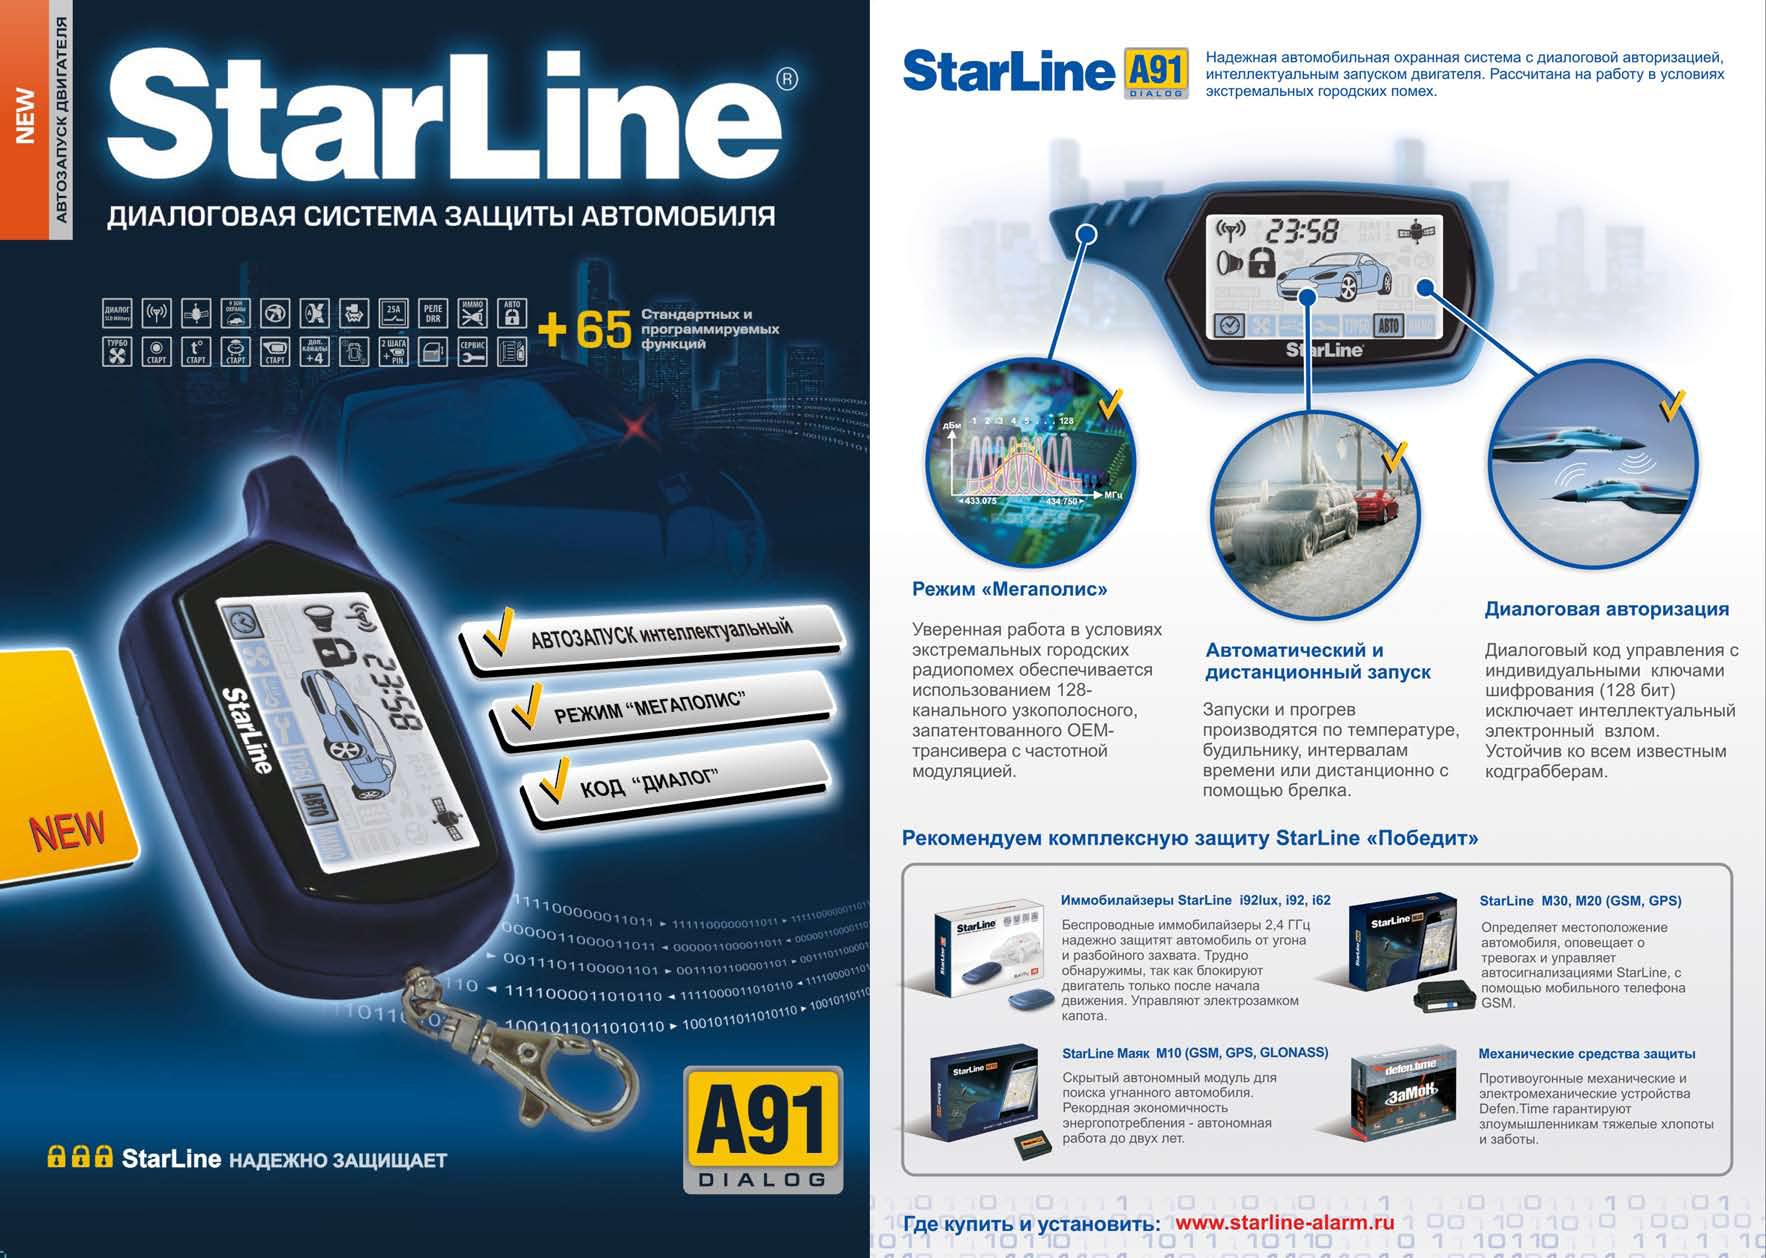 Авторизация starline. STARLINE a91 dialog. STARLINE a61 автозапуск. Старлайн а61 dialog. Старлайн система a61.